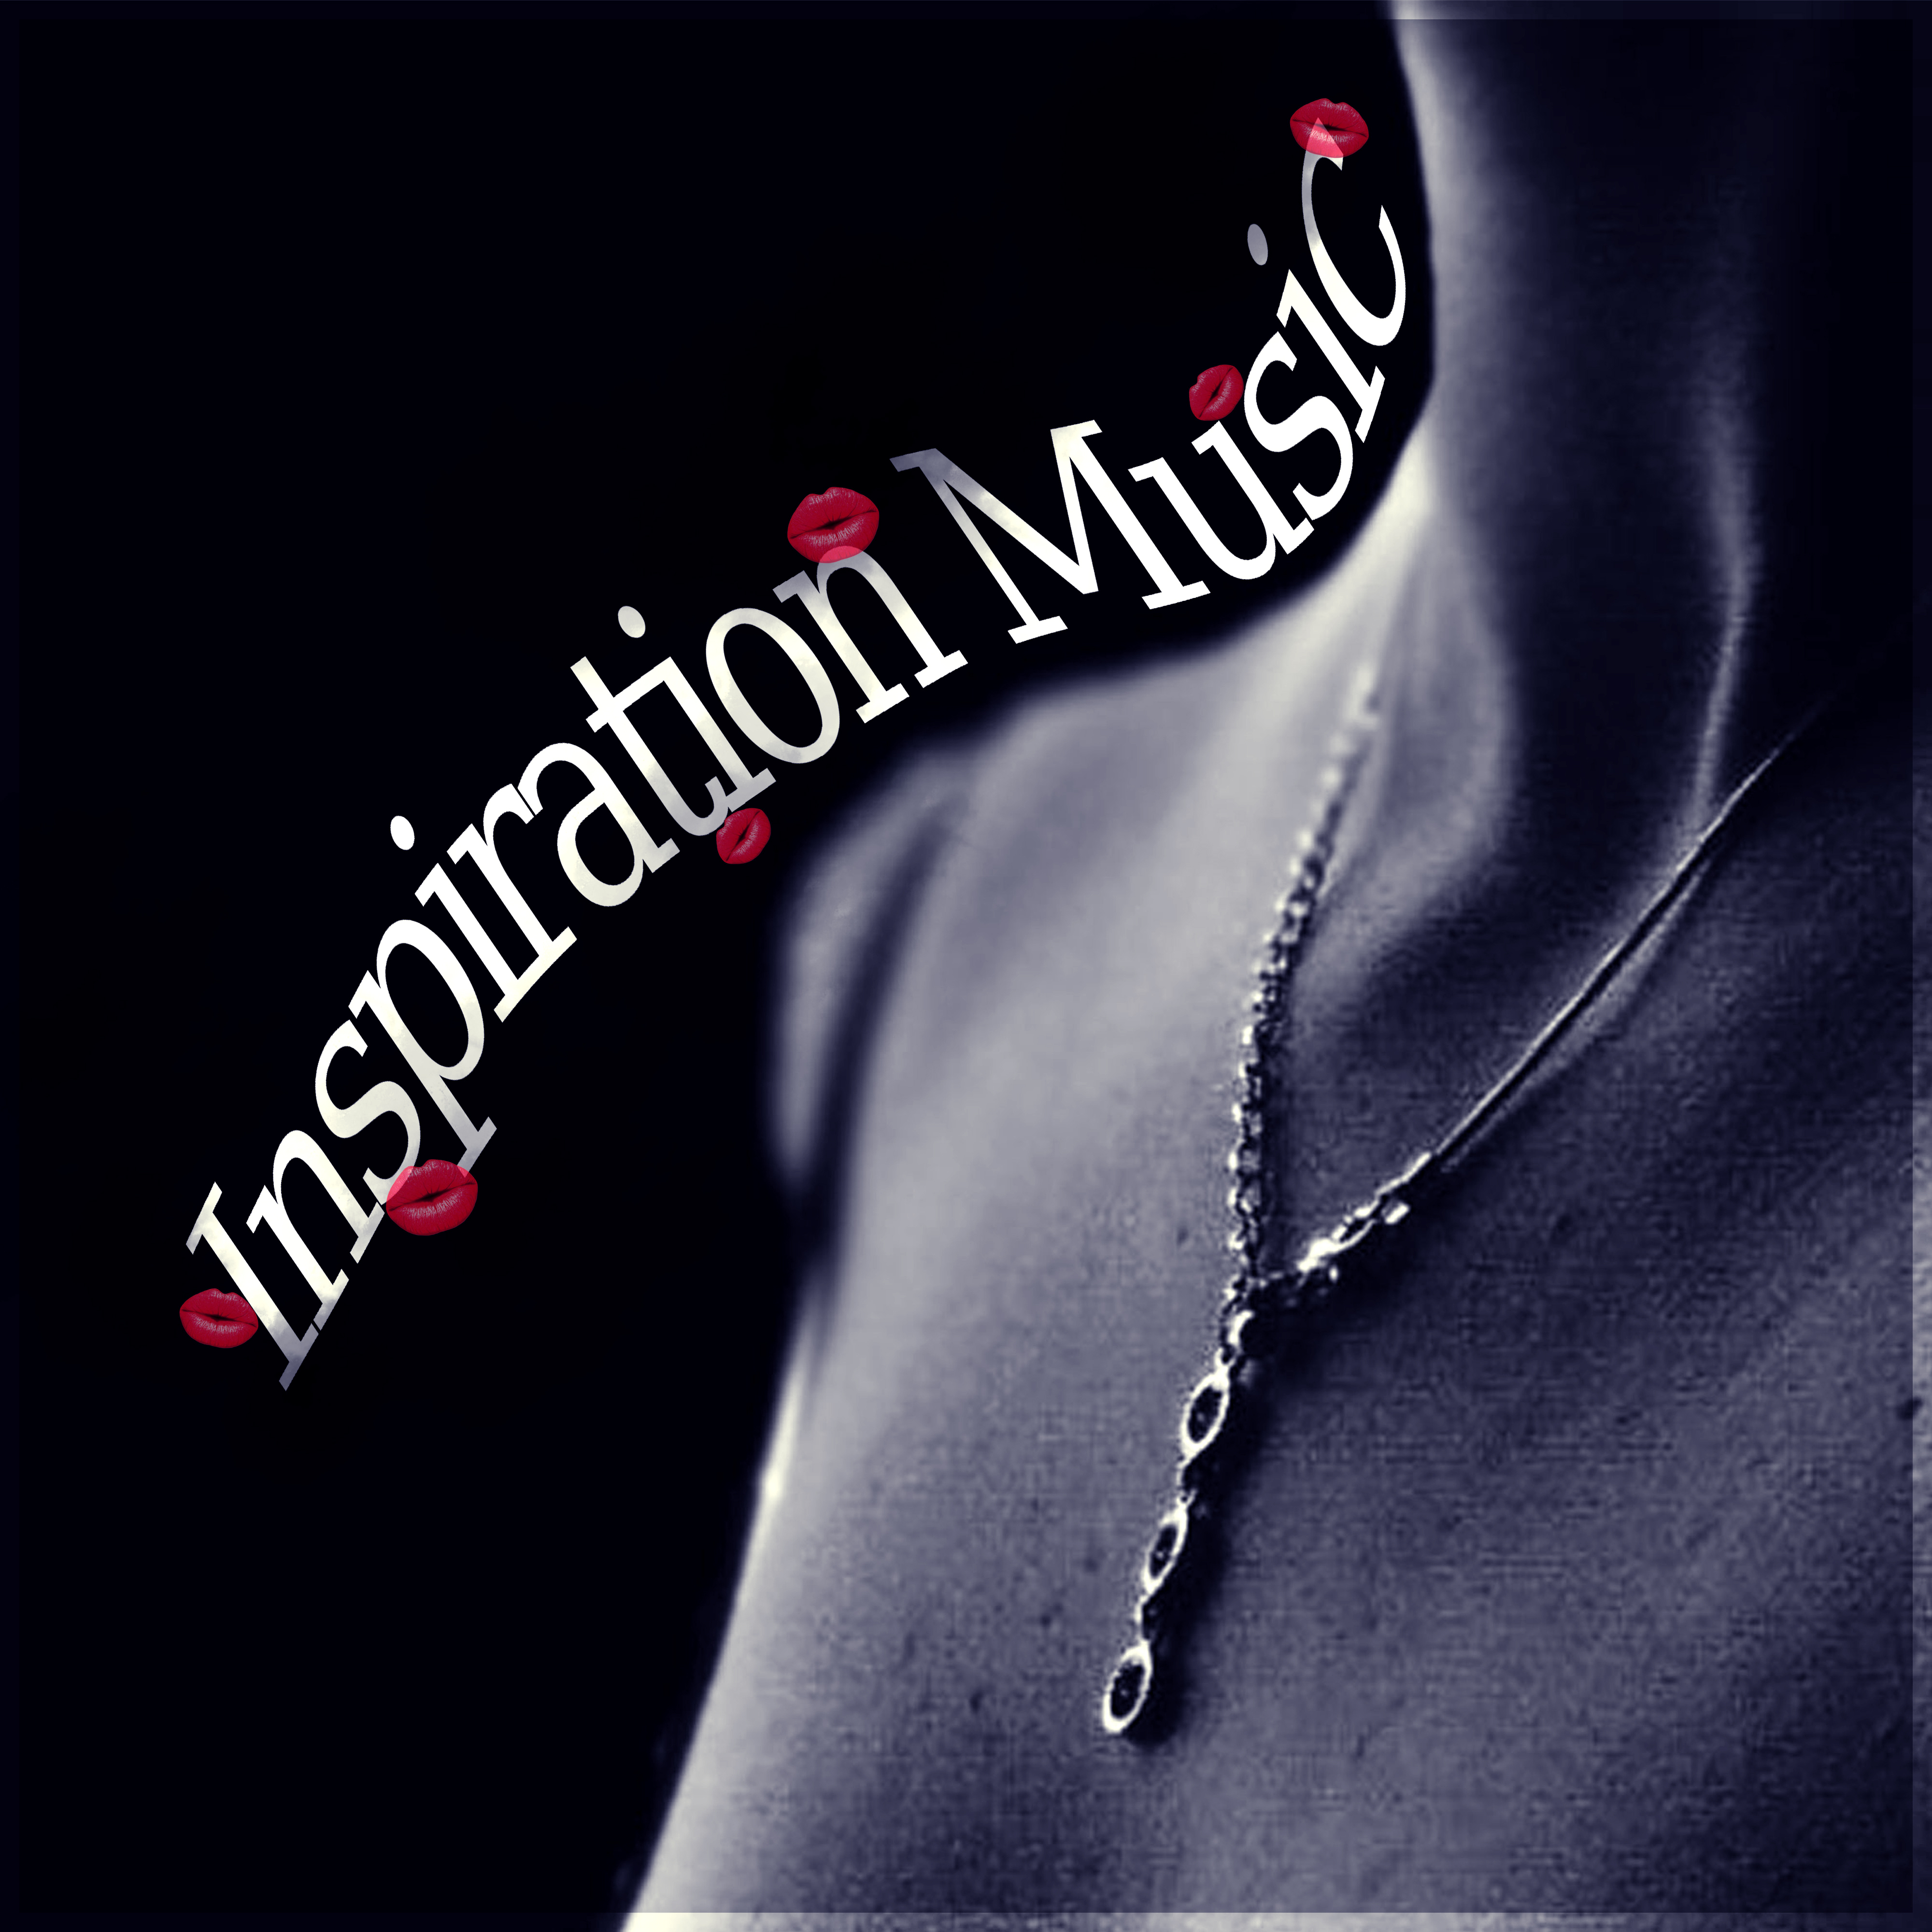 Inspiration Music - Sensual Erotic Music, ****** Healing, New Age, Atmosphere, Mood, ***